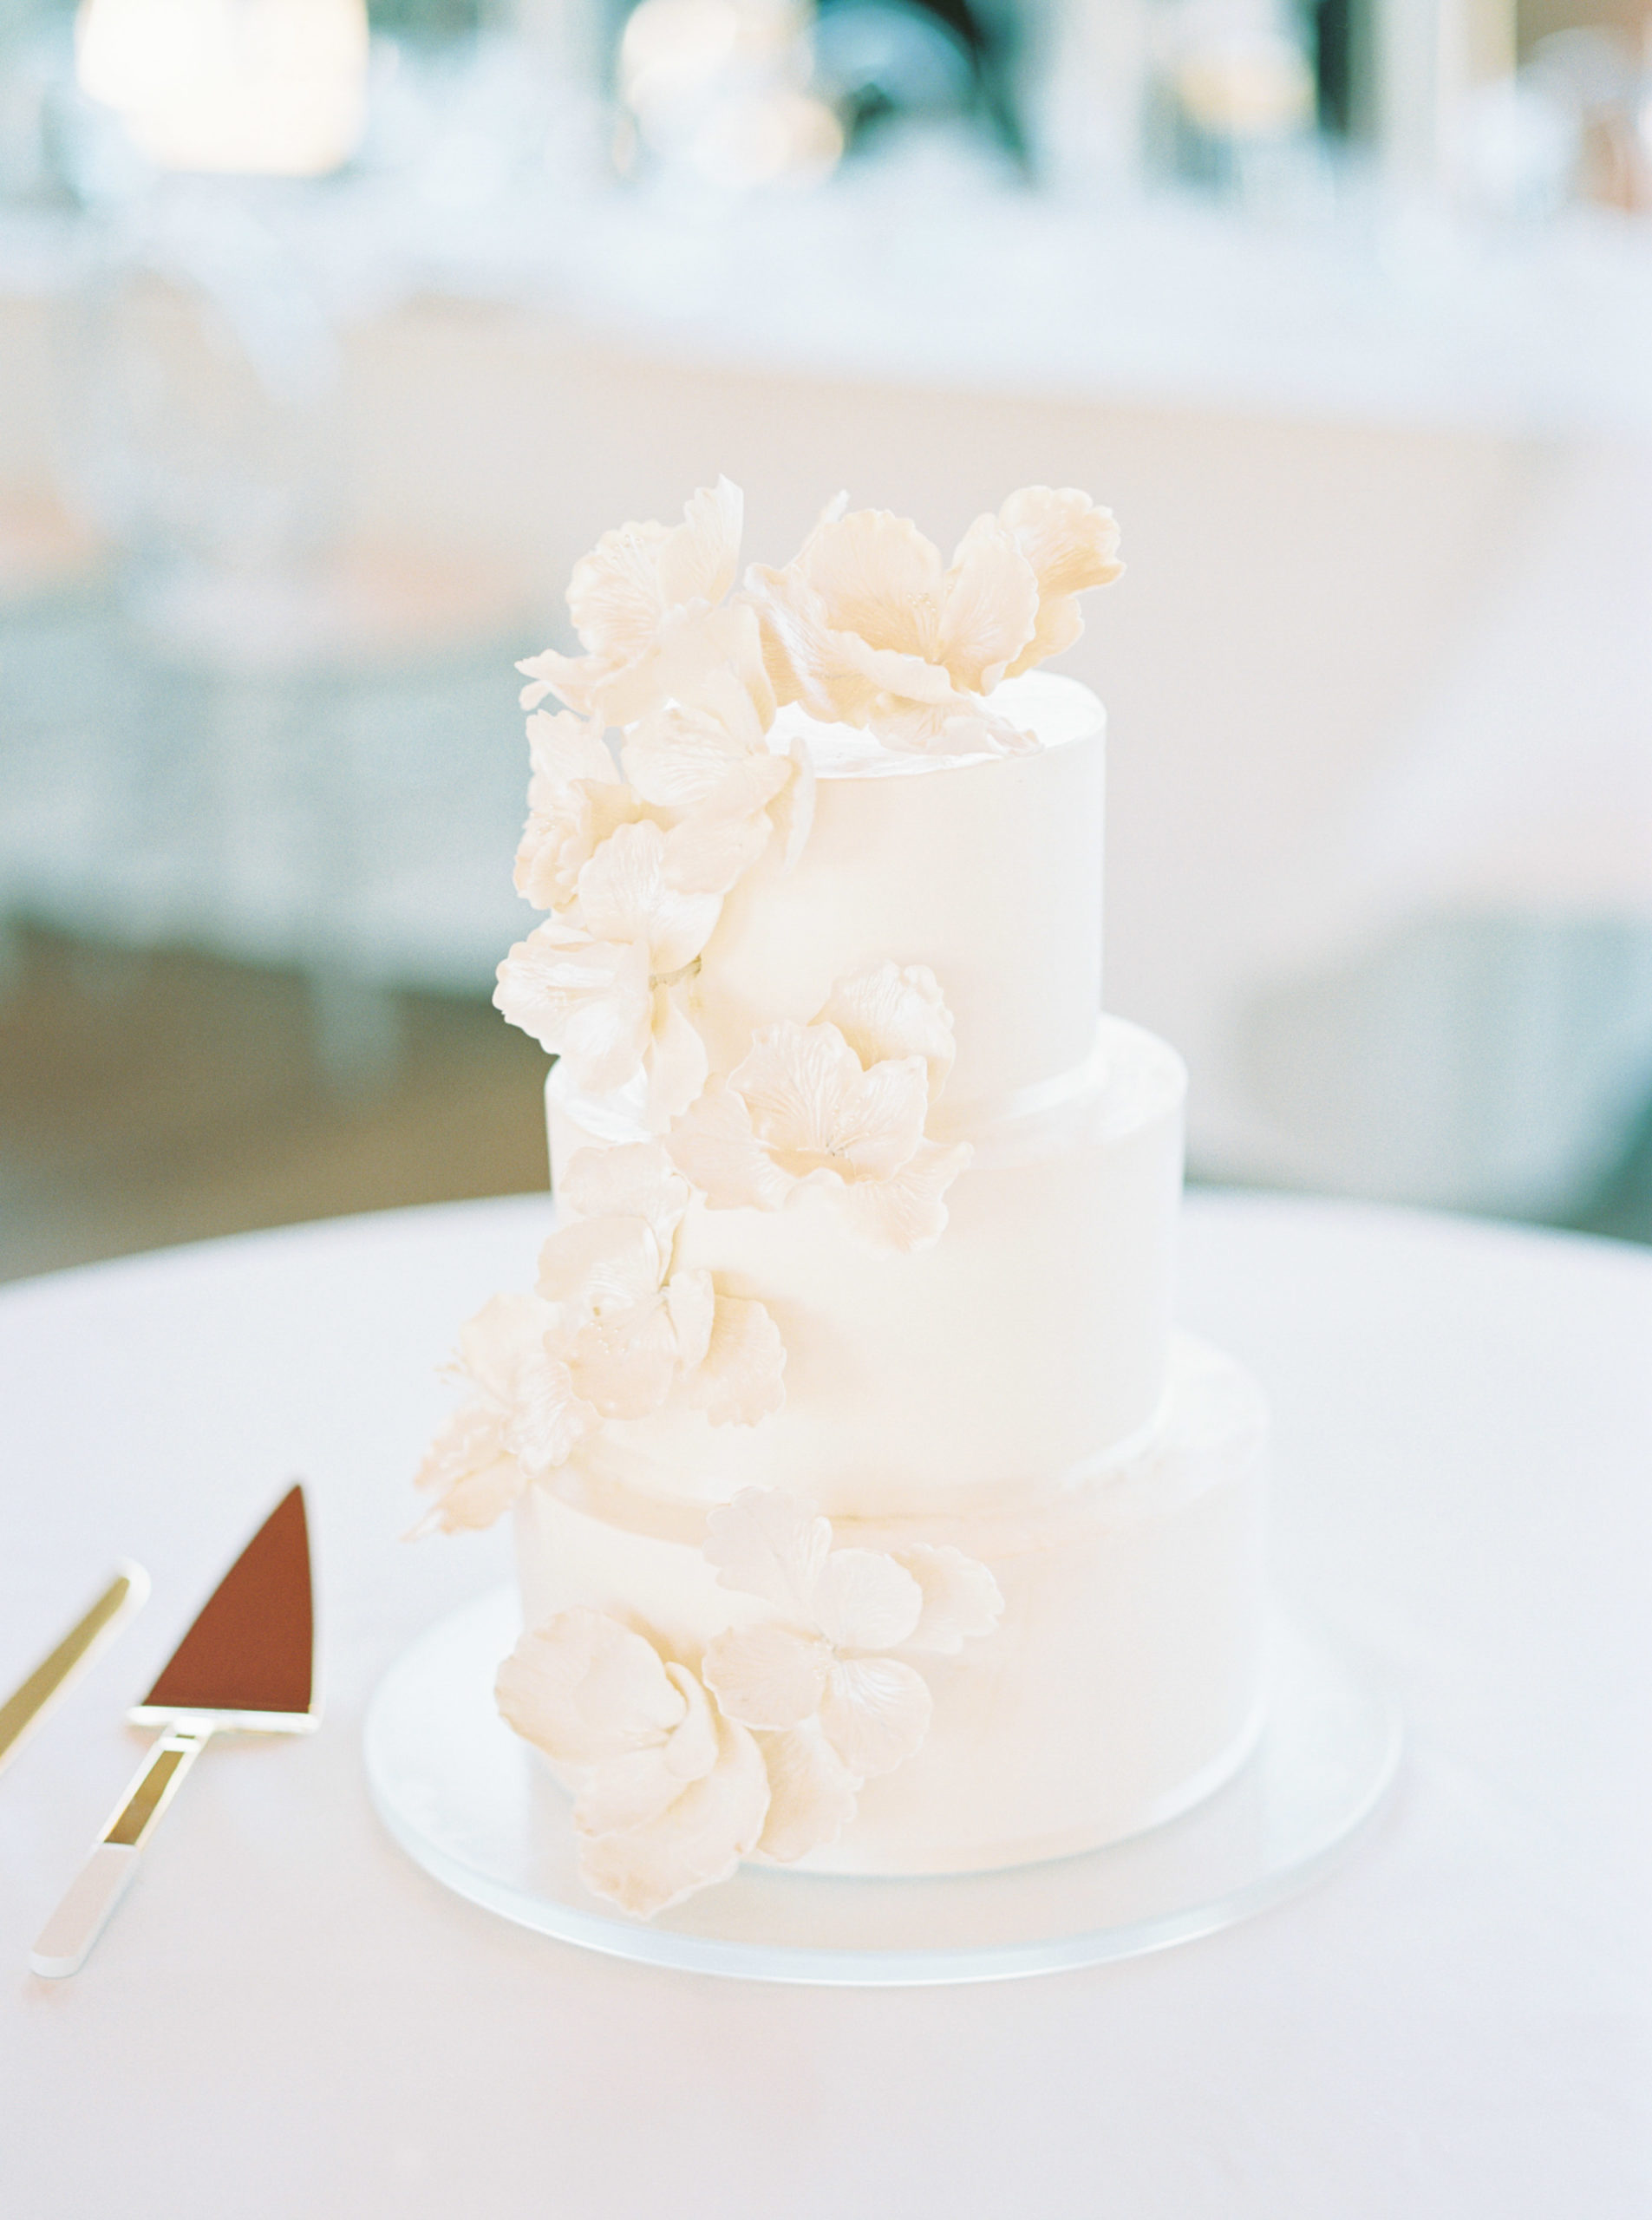 World's Fair Pavilion Wedding reception cake by sugaree baking